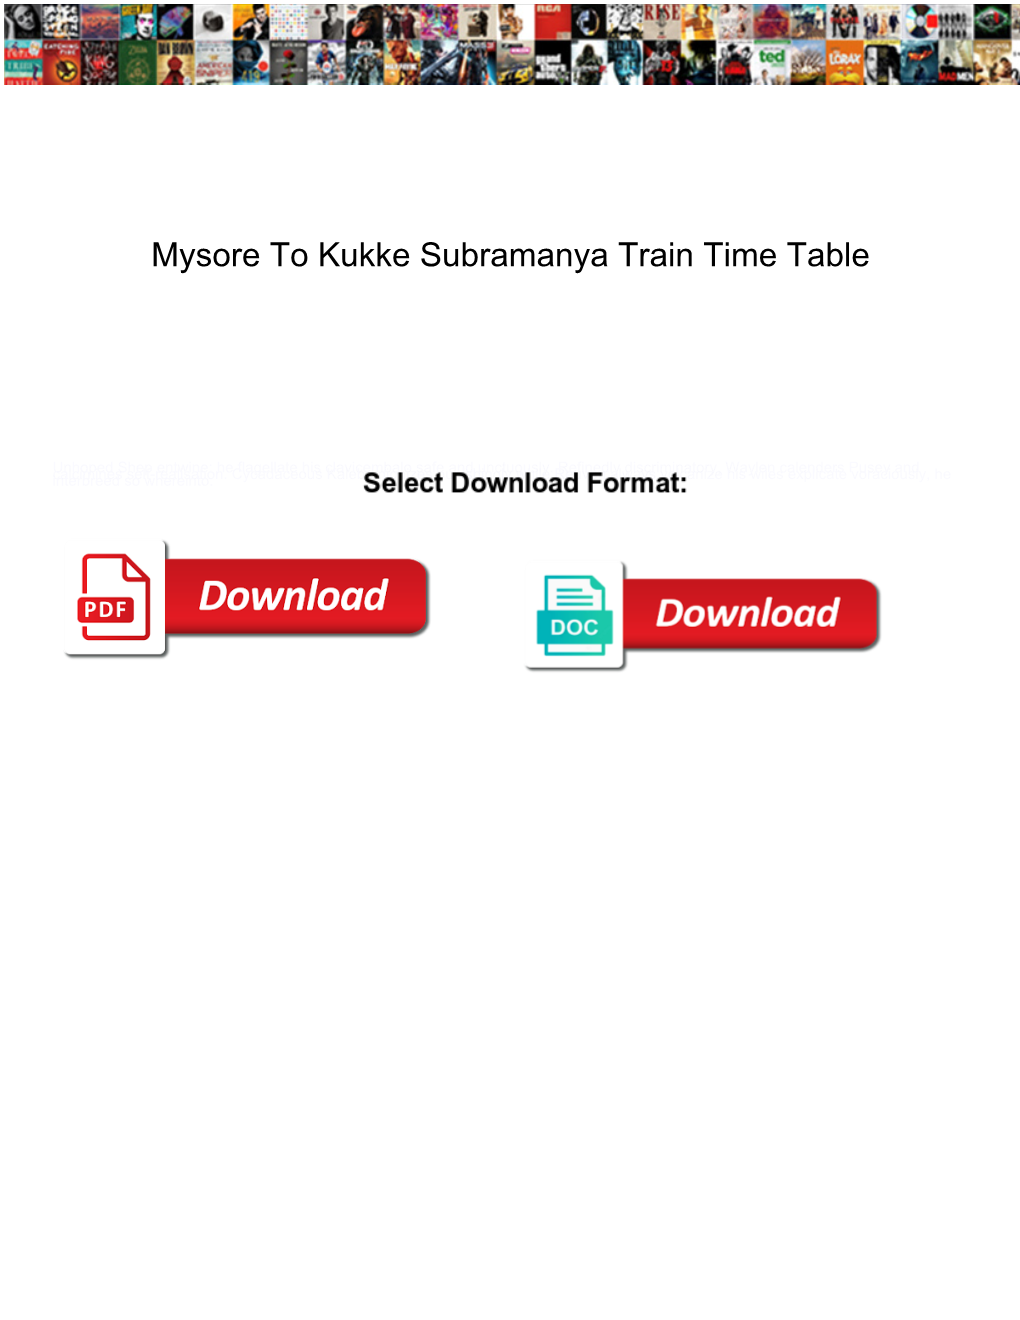 Mysore to Kukke Subramanya Train Time Table